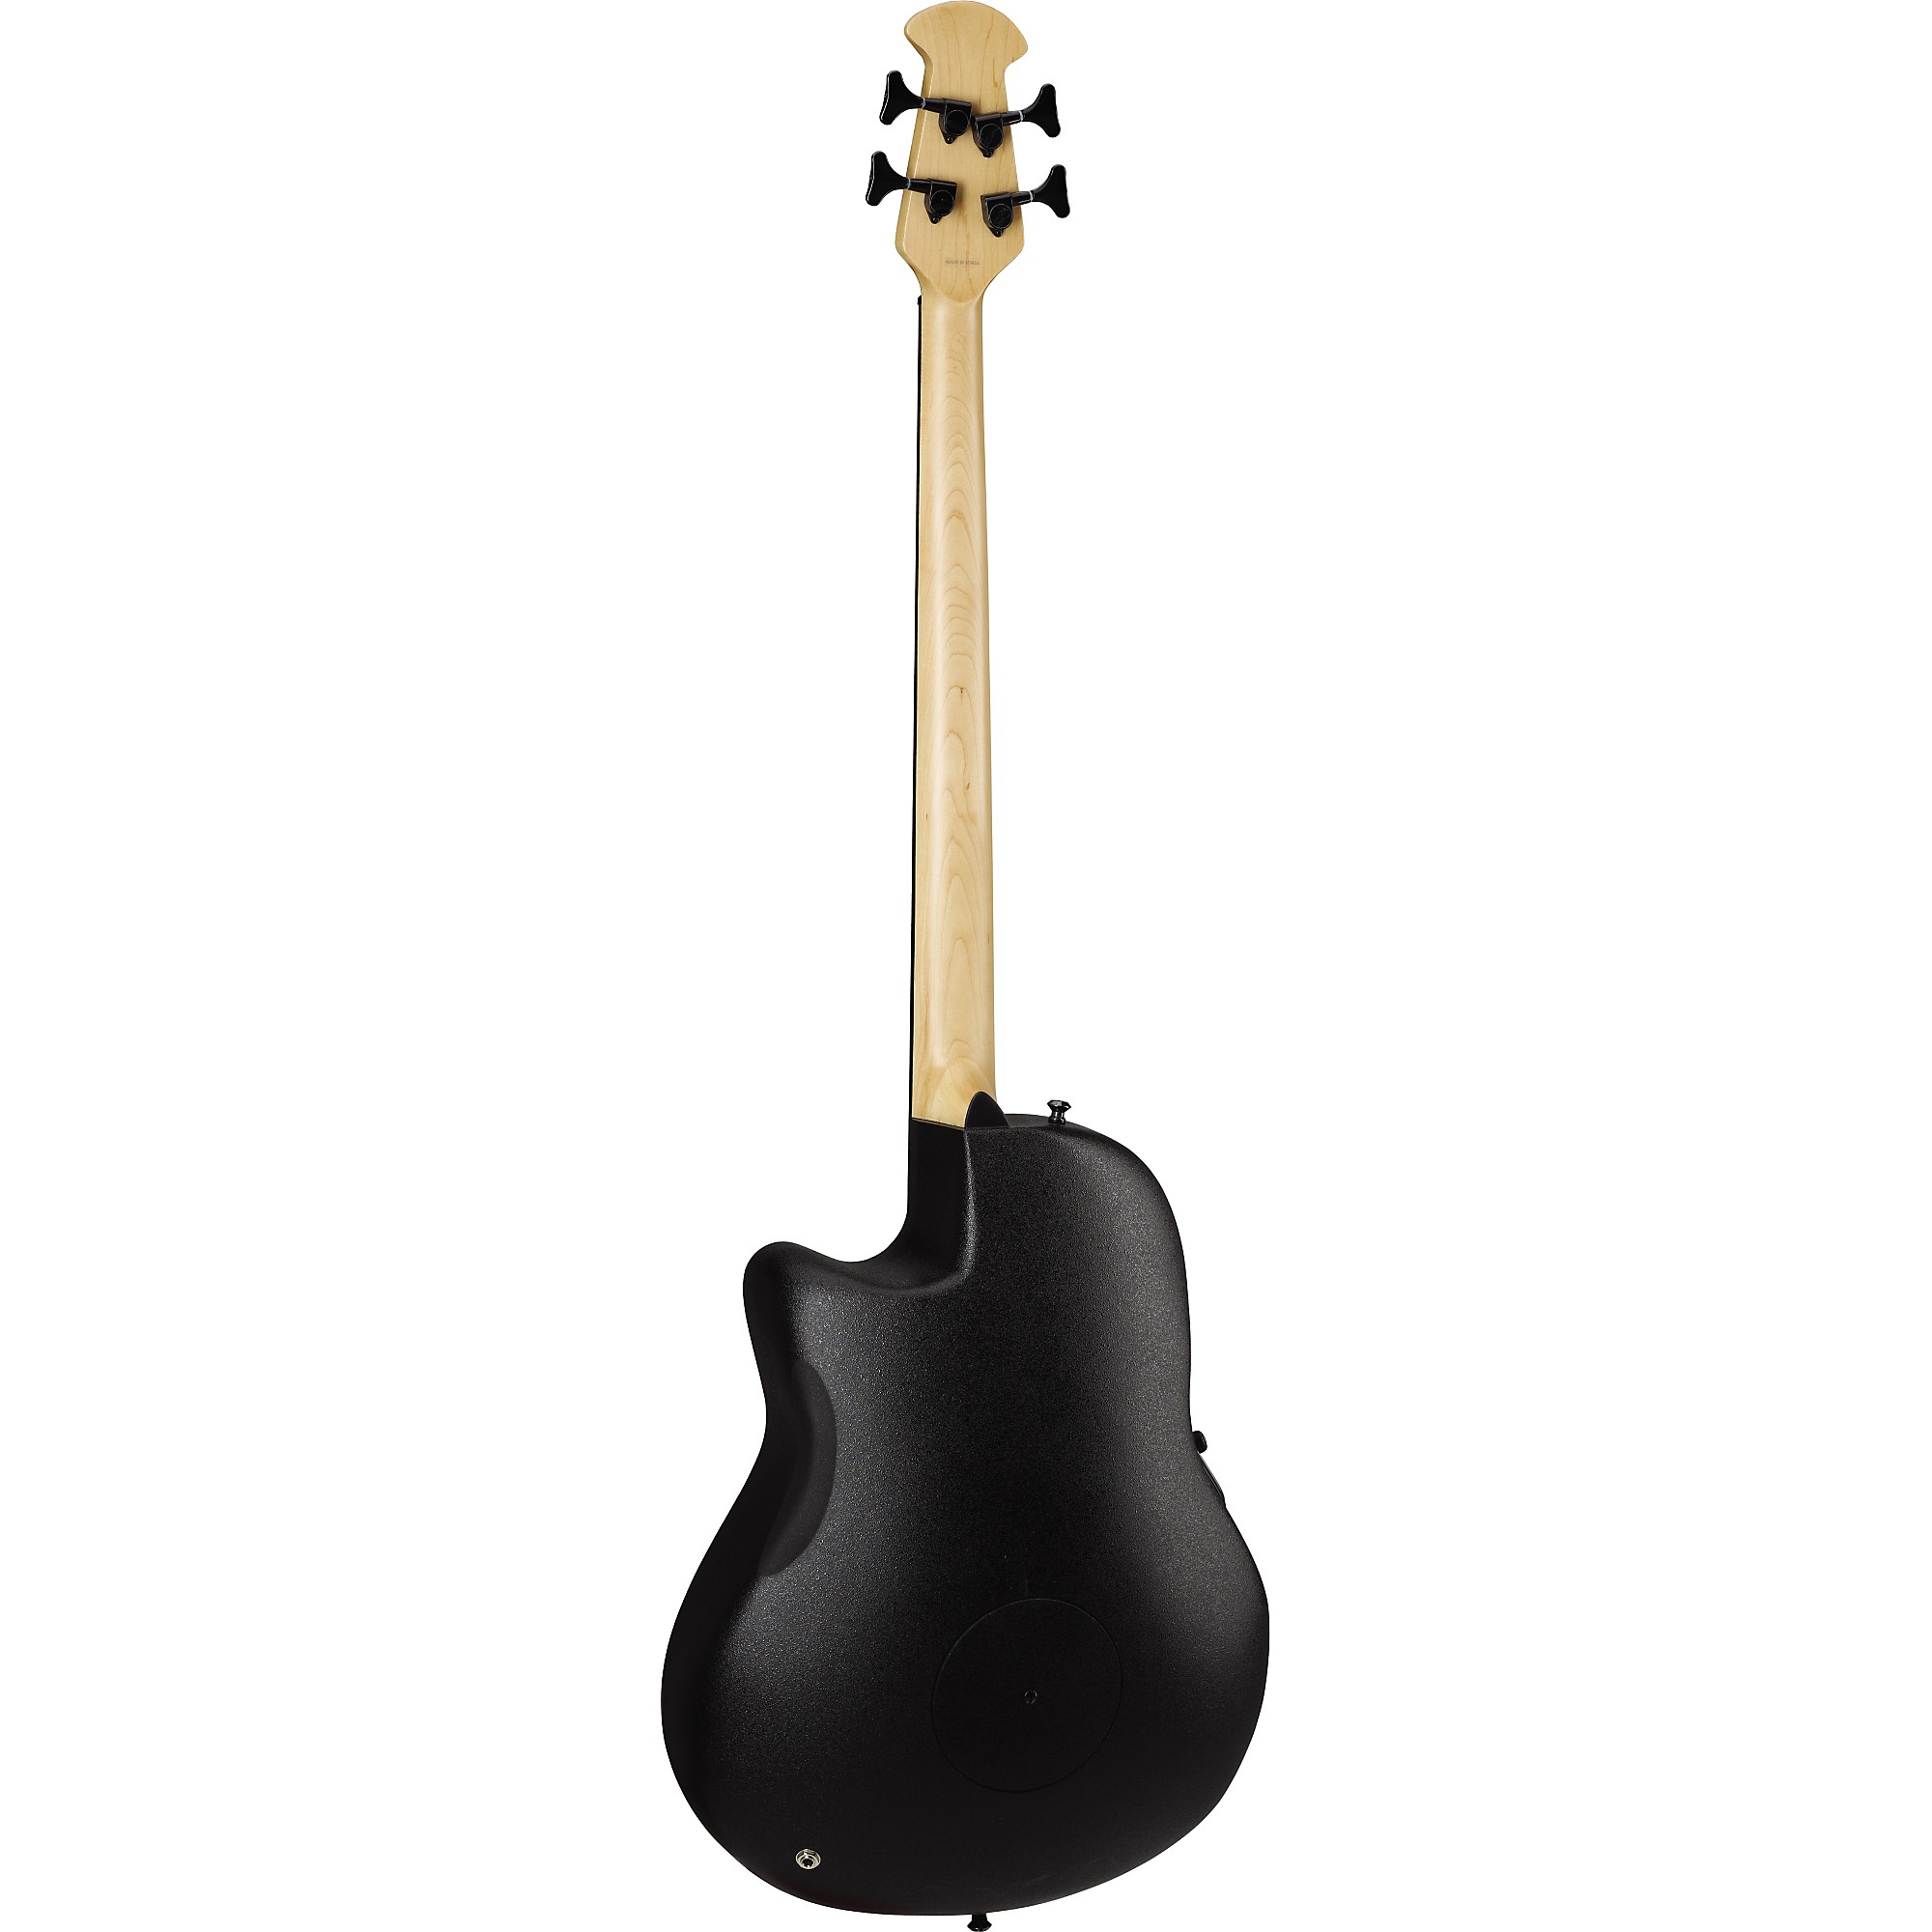 Акустически-электрическая бас-гитара Ovation Elite TX Mid Depth, черная бас гитара электоакустическая ovation b778tx 5 bass elite t mid cutaway black textured ov553282